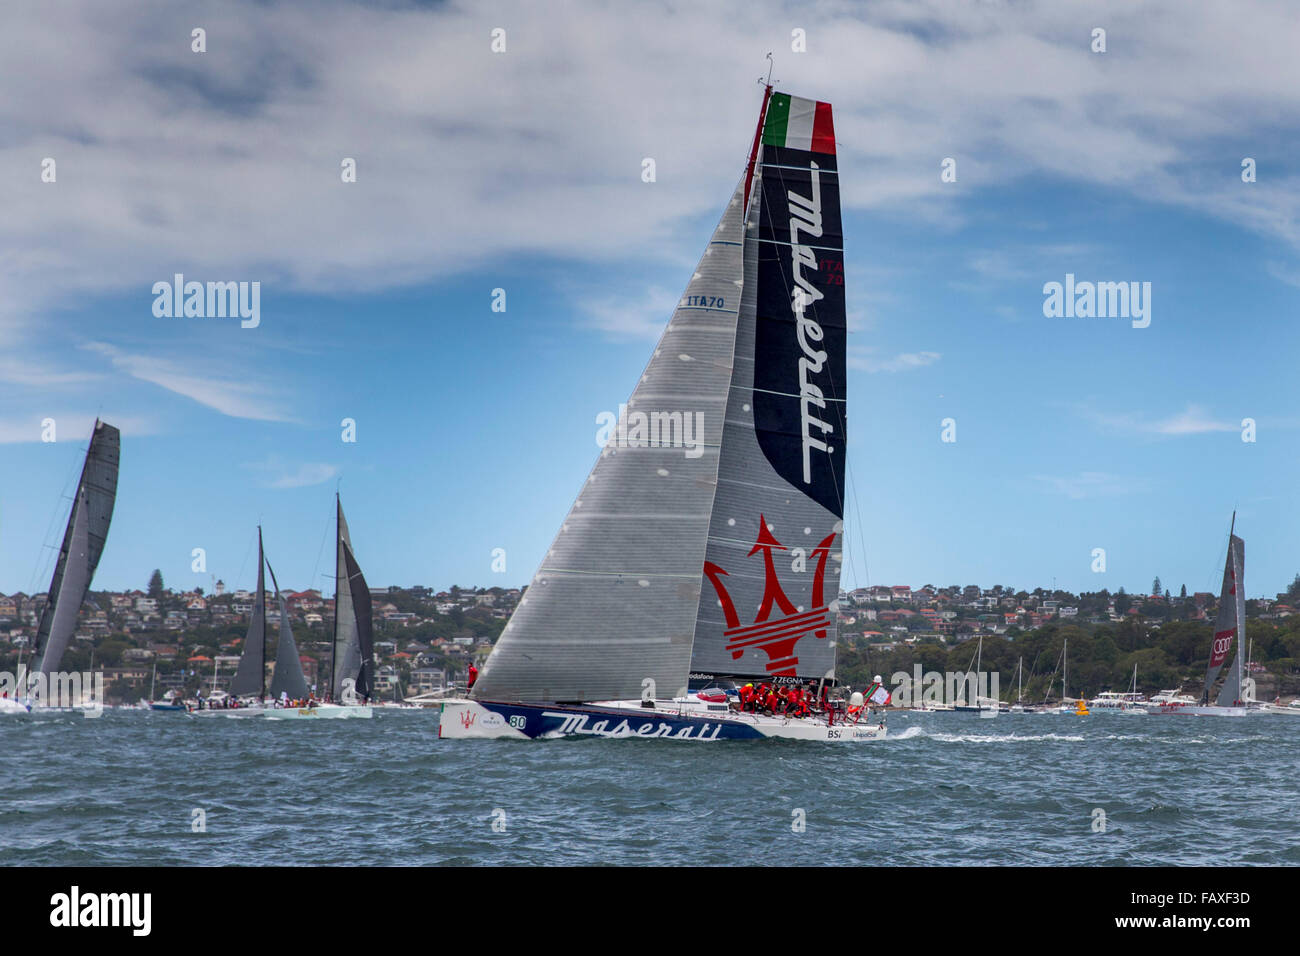 Rolex Sydney Hobart Yacht Race, 2015, Sydney Harbour, Australia, Saturday, December 26, 2015. Stock Photo